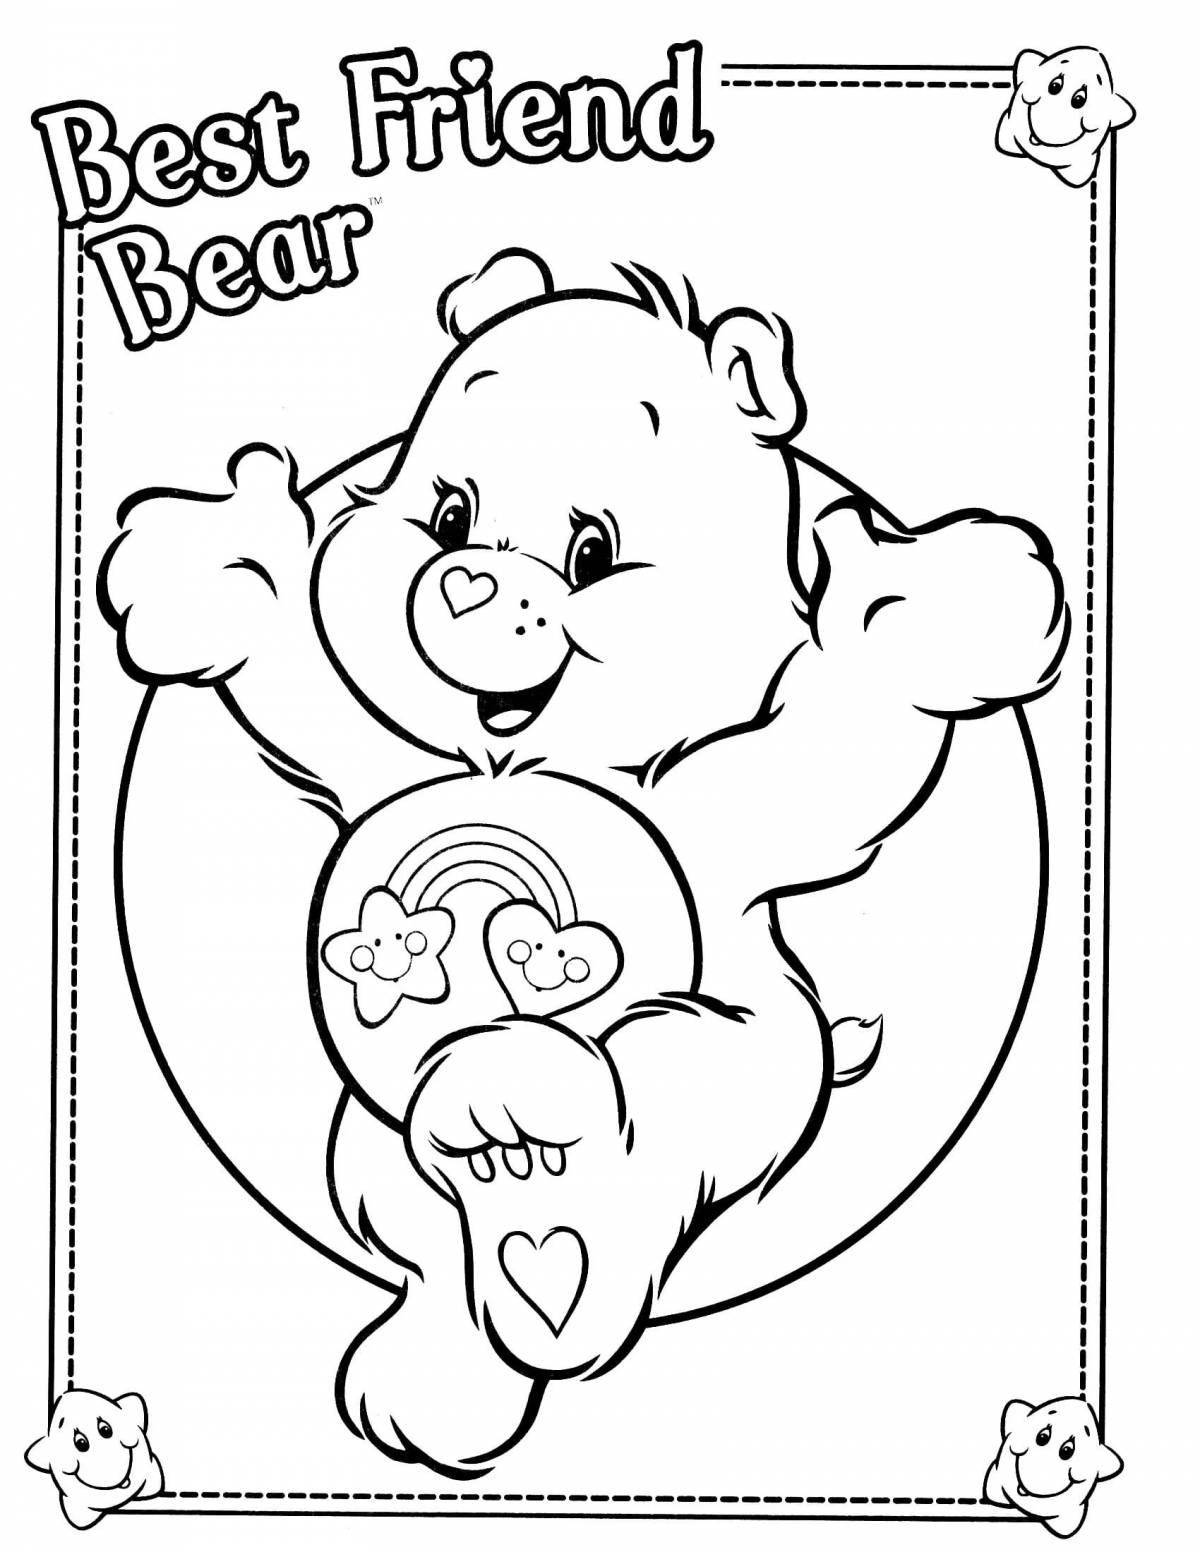 Care bears #1